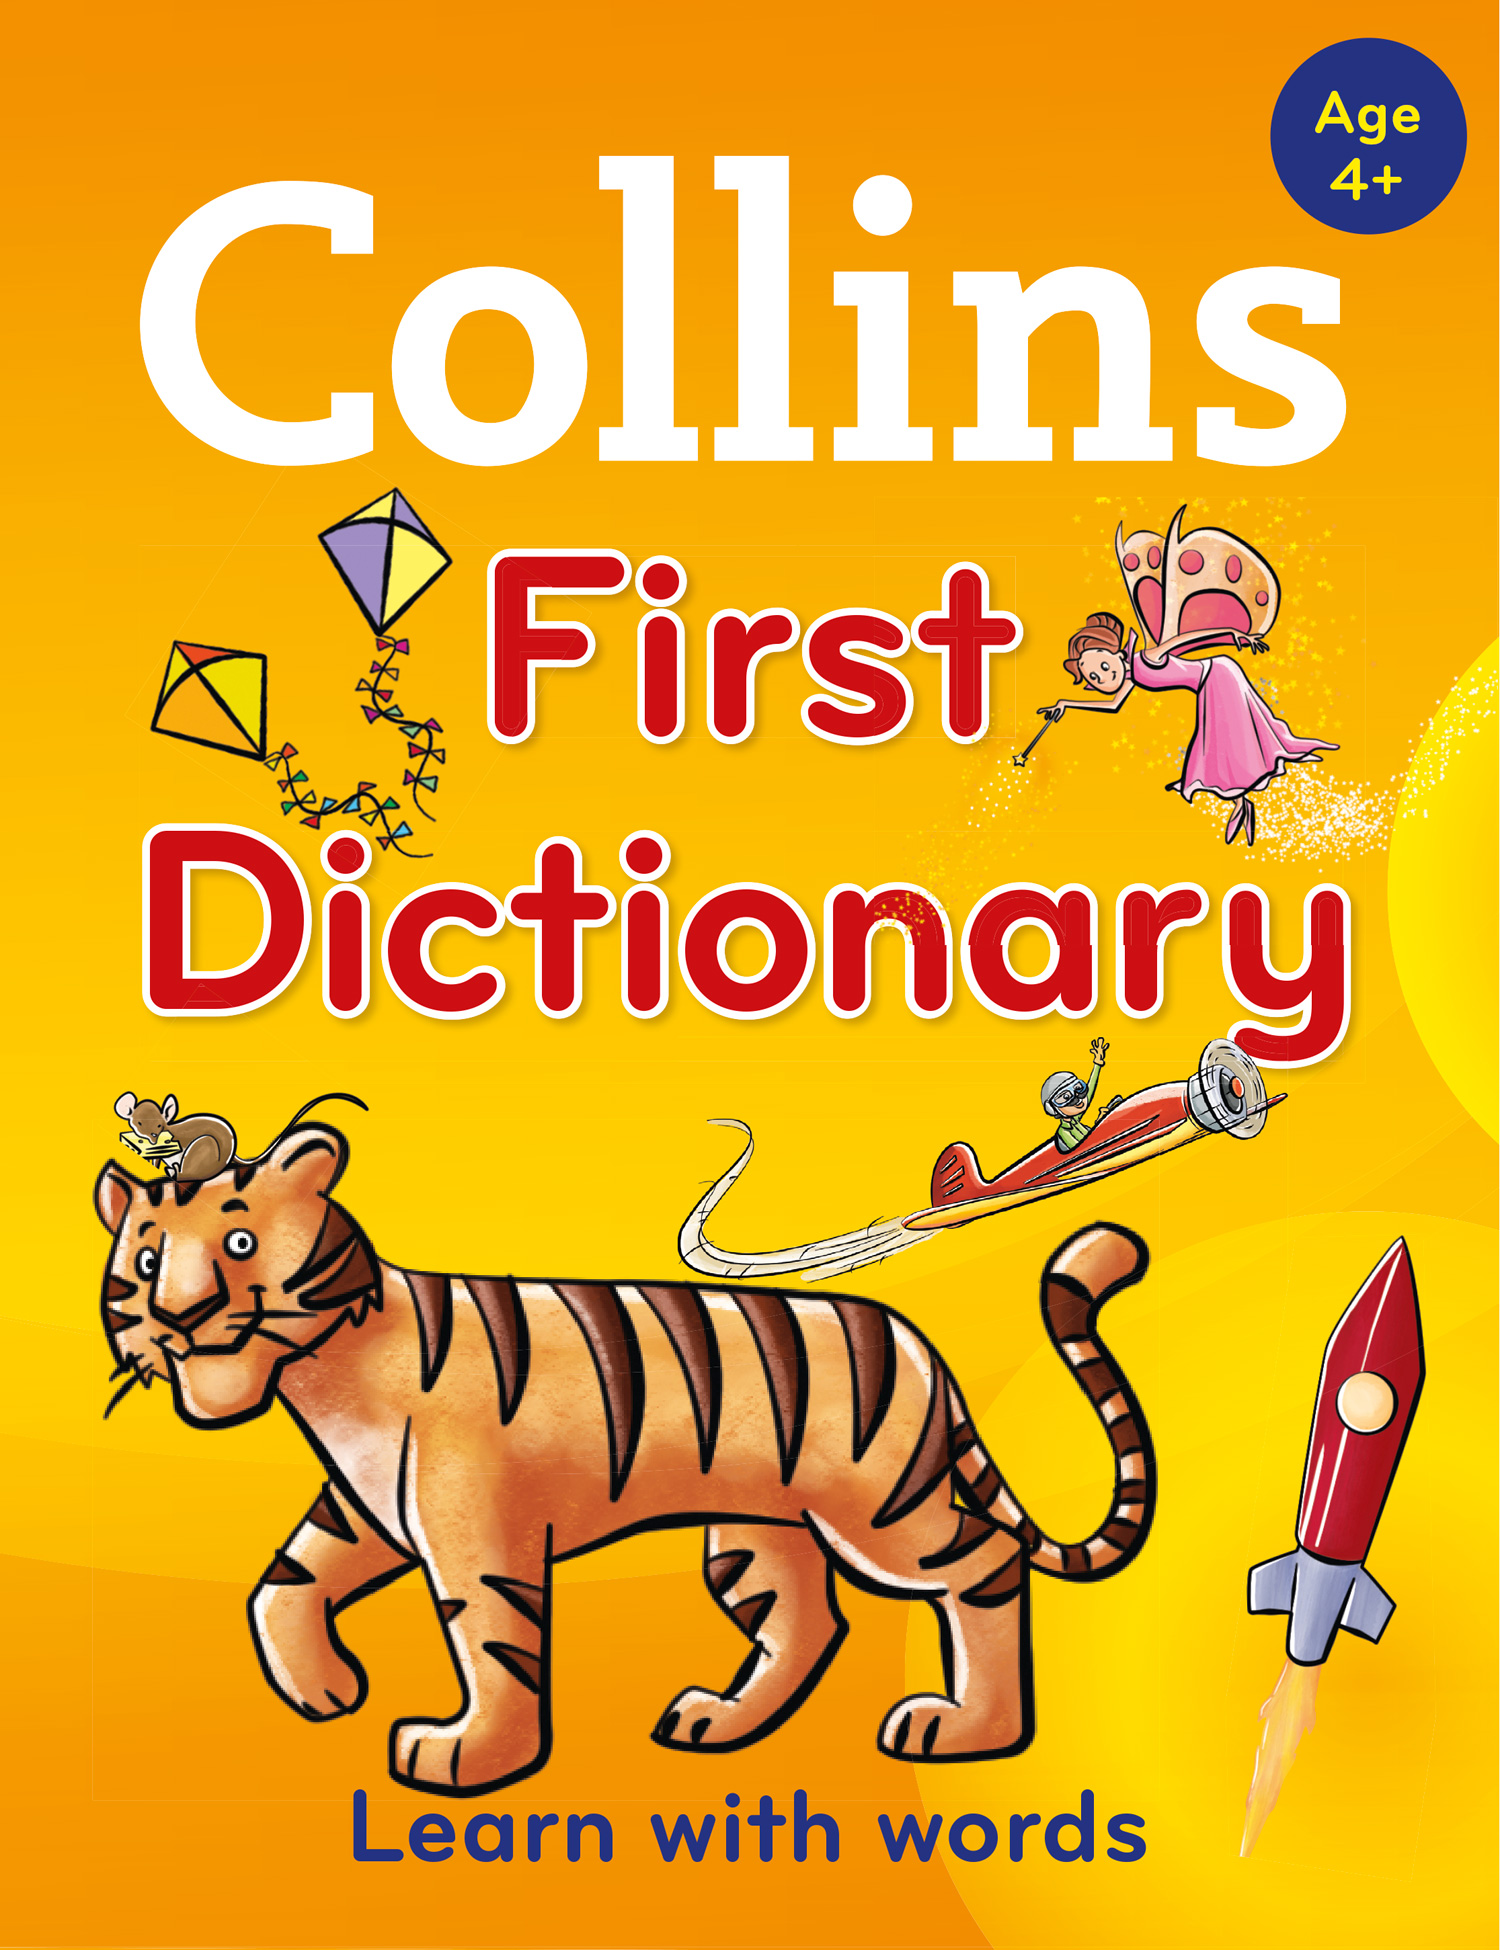 First dictionary. Коллинз ДИКШИНАРИ. Collins English Dictionary книга. Collins Dictionary first book. Collins picture Dictionary.